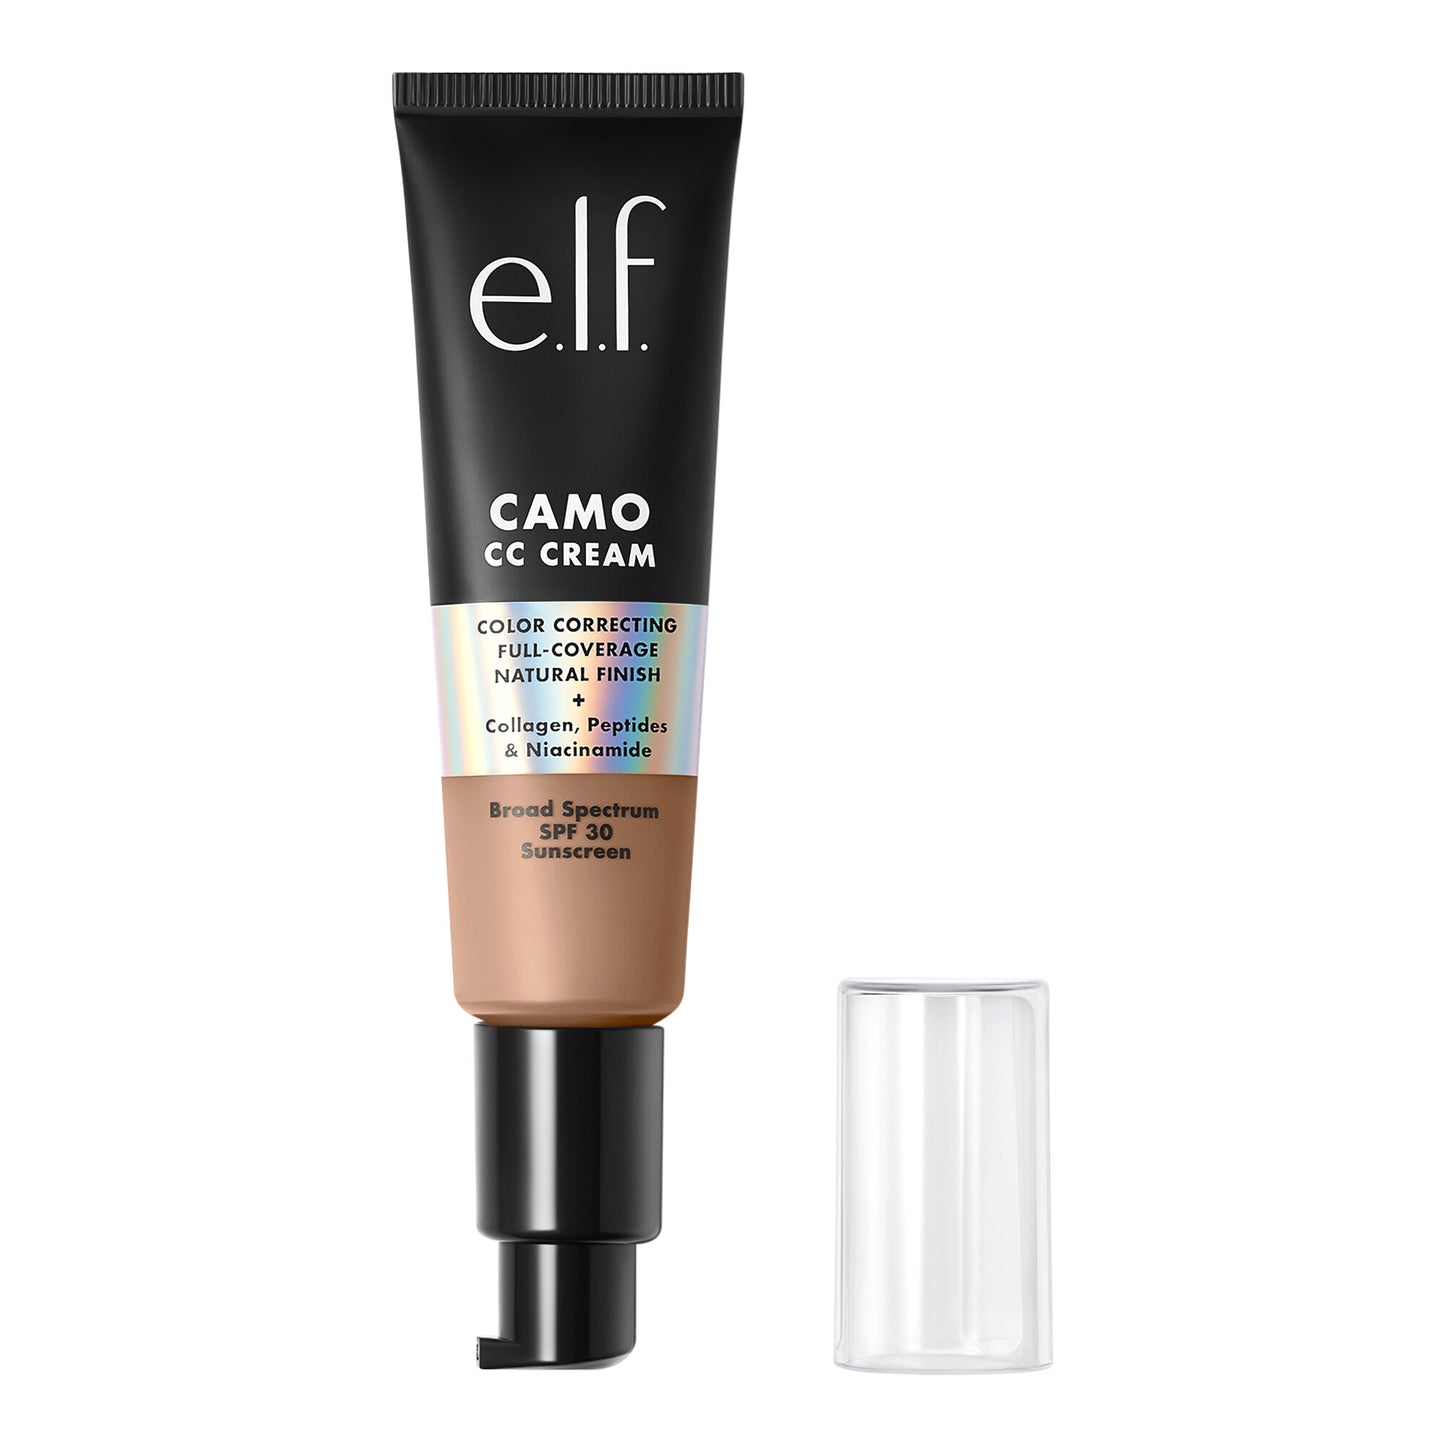 ELF Camo CC Cream Broad Spectrum SPF 30 Sunscreen 1.05 oz / 30g